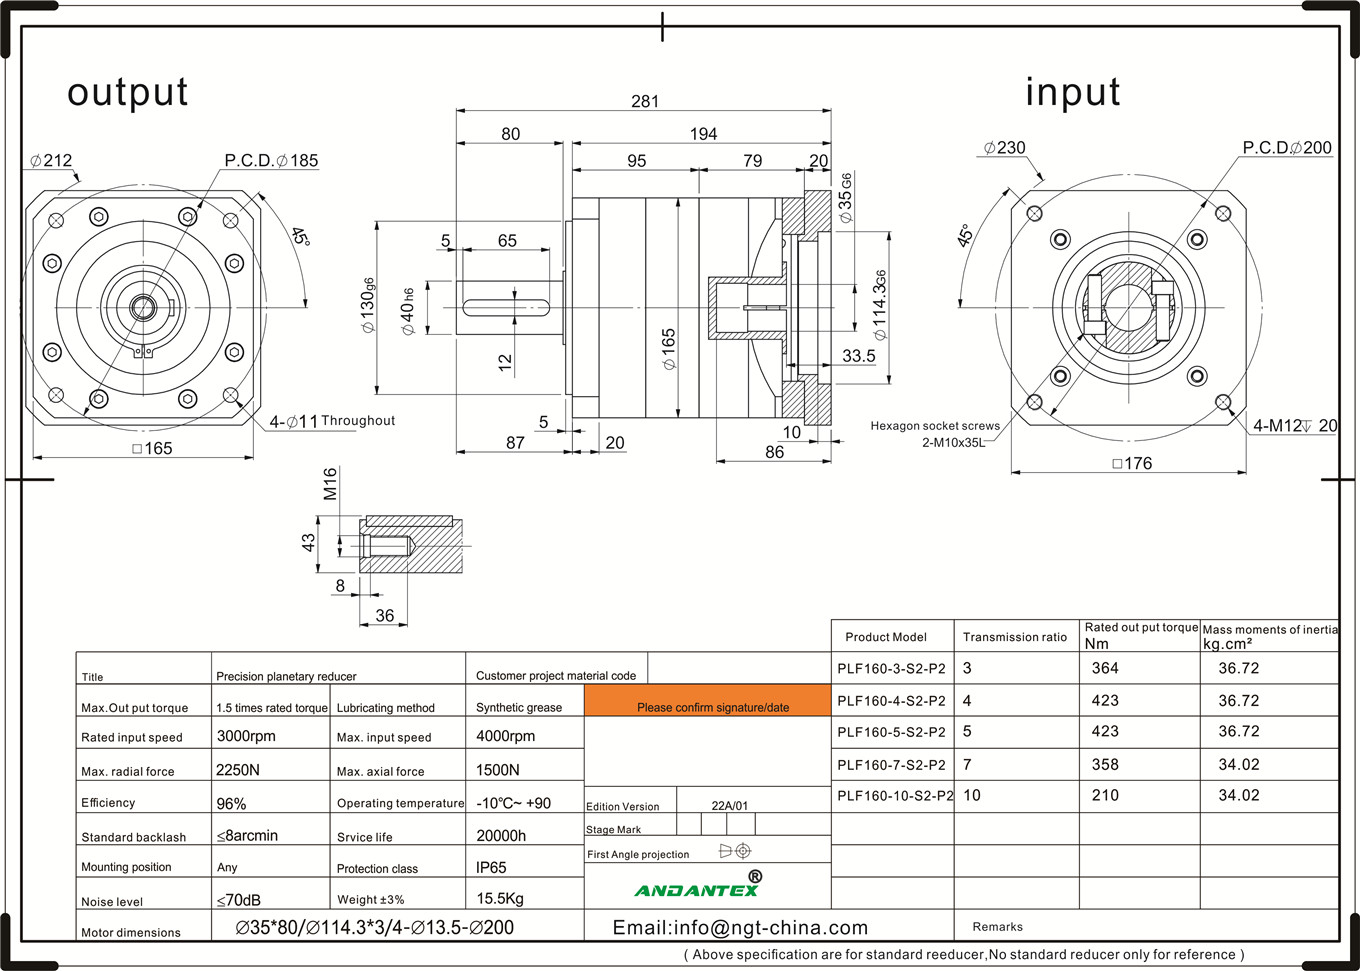 Andantex plf160-7-s2-p2 معیاري لړۍ سیارې ګیربکسونه د بسته بندۍ ماشین تجهیزات - 01